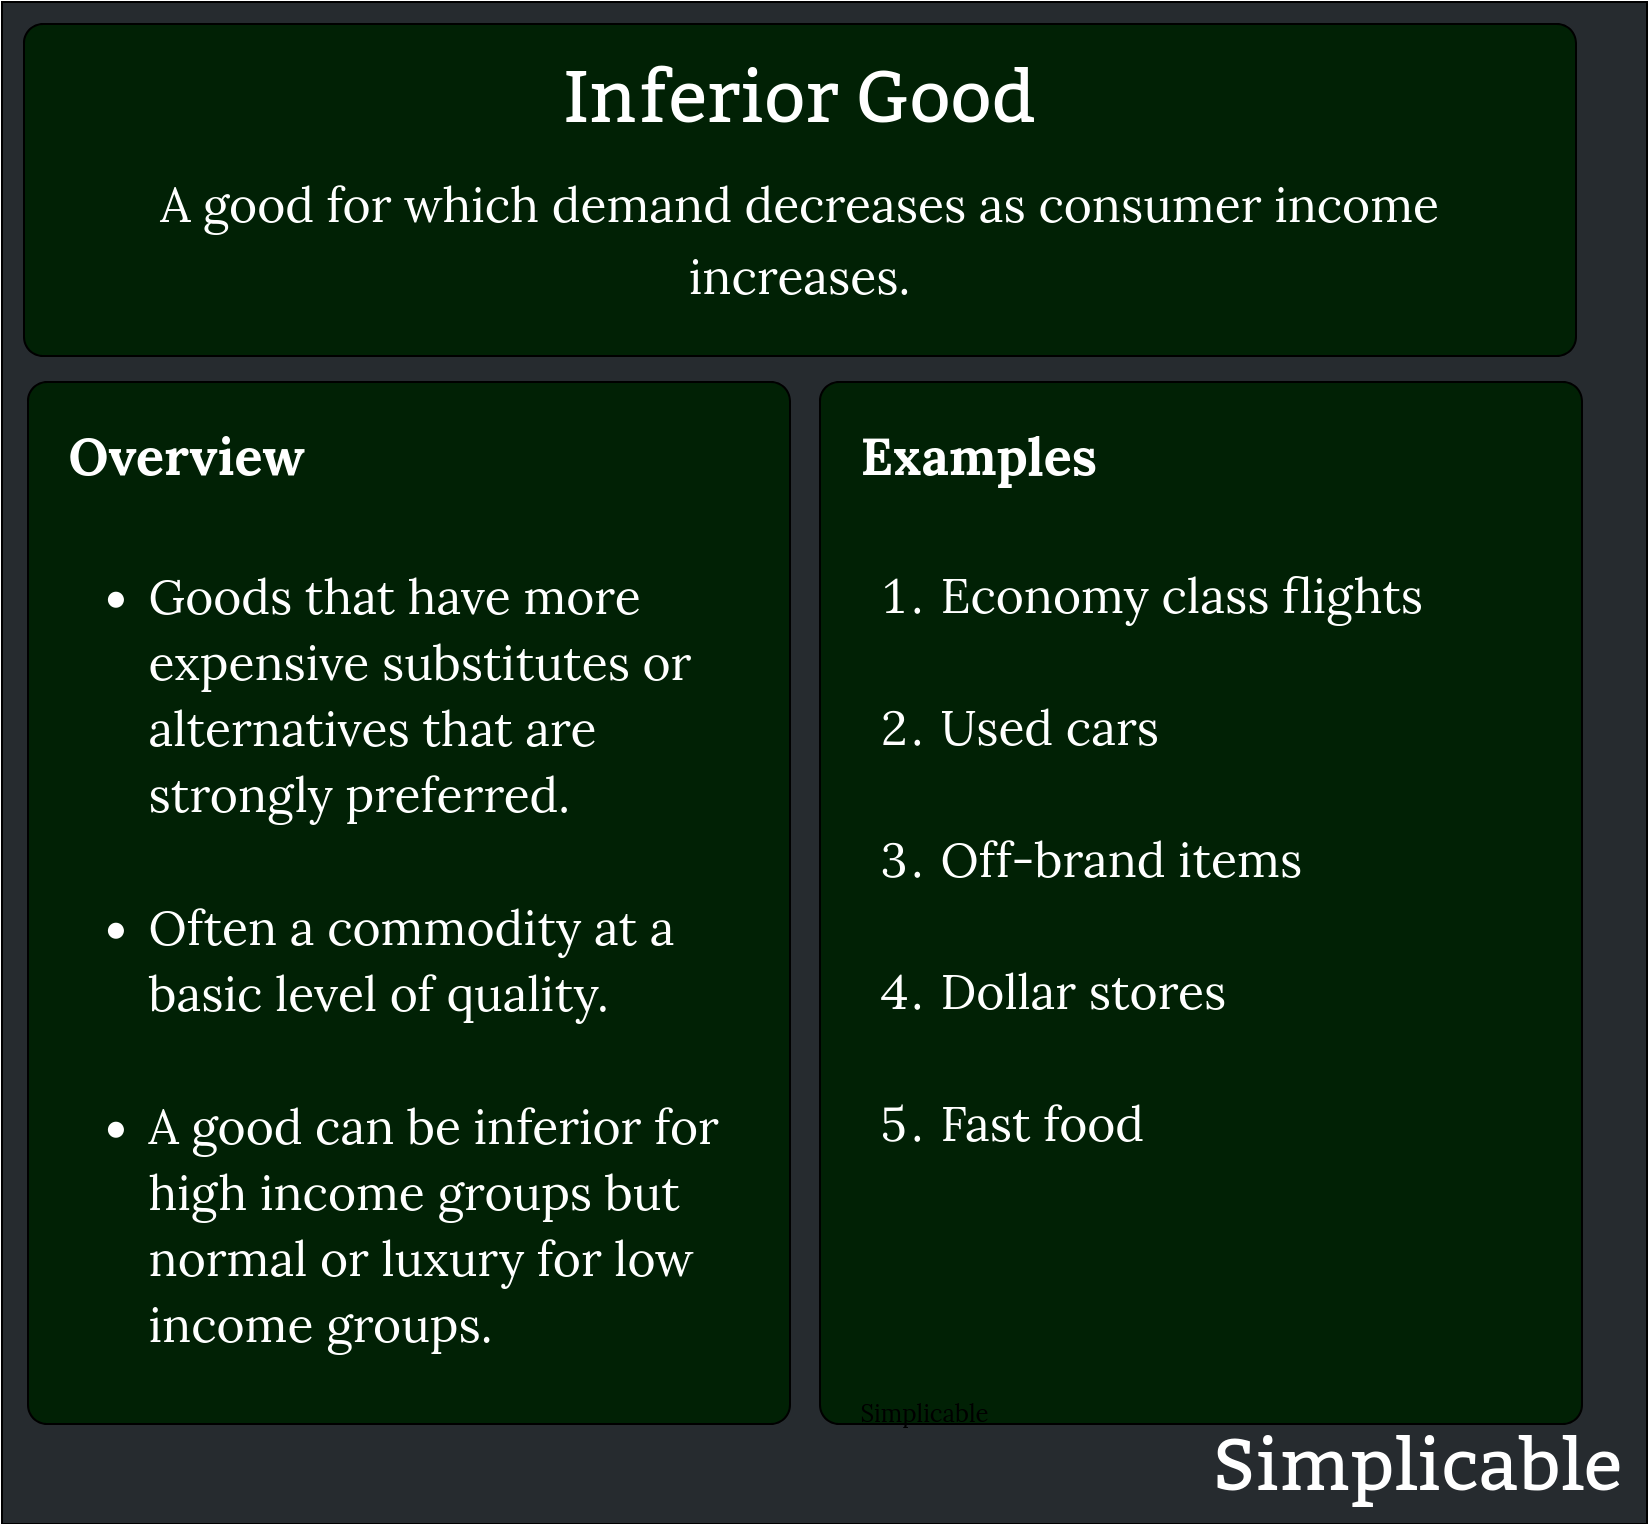 inferior good summary examples